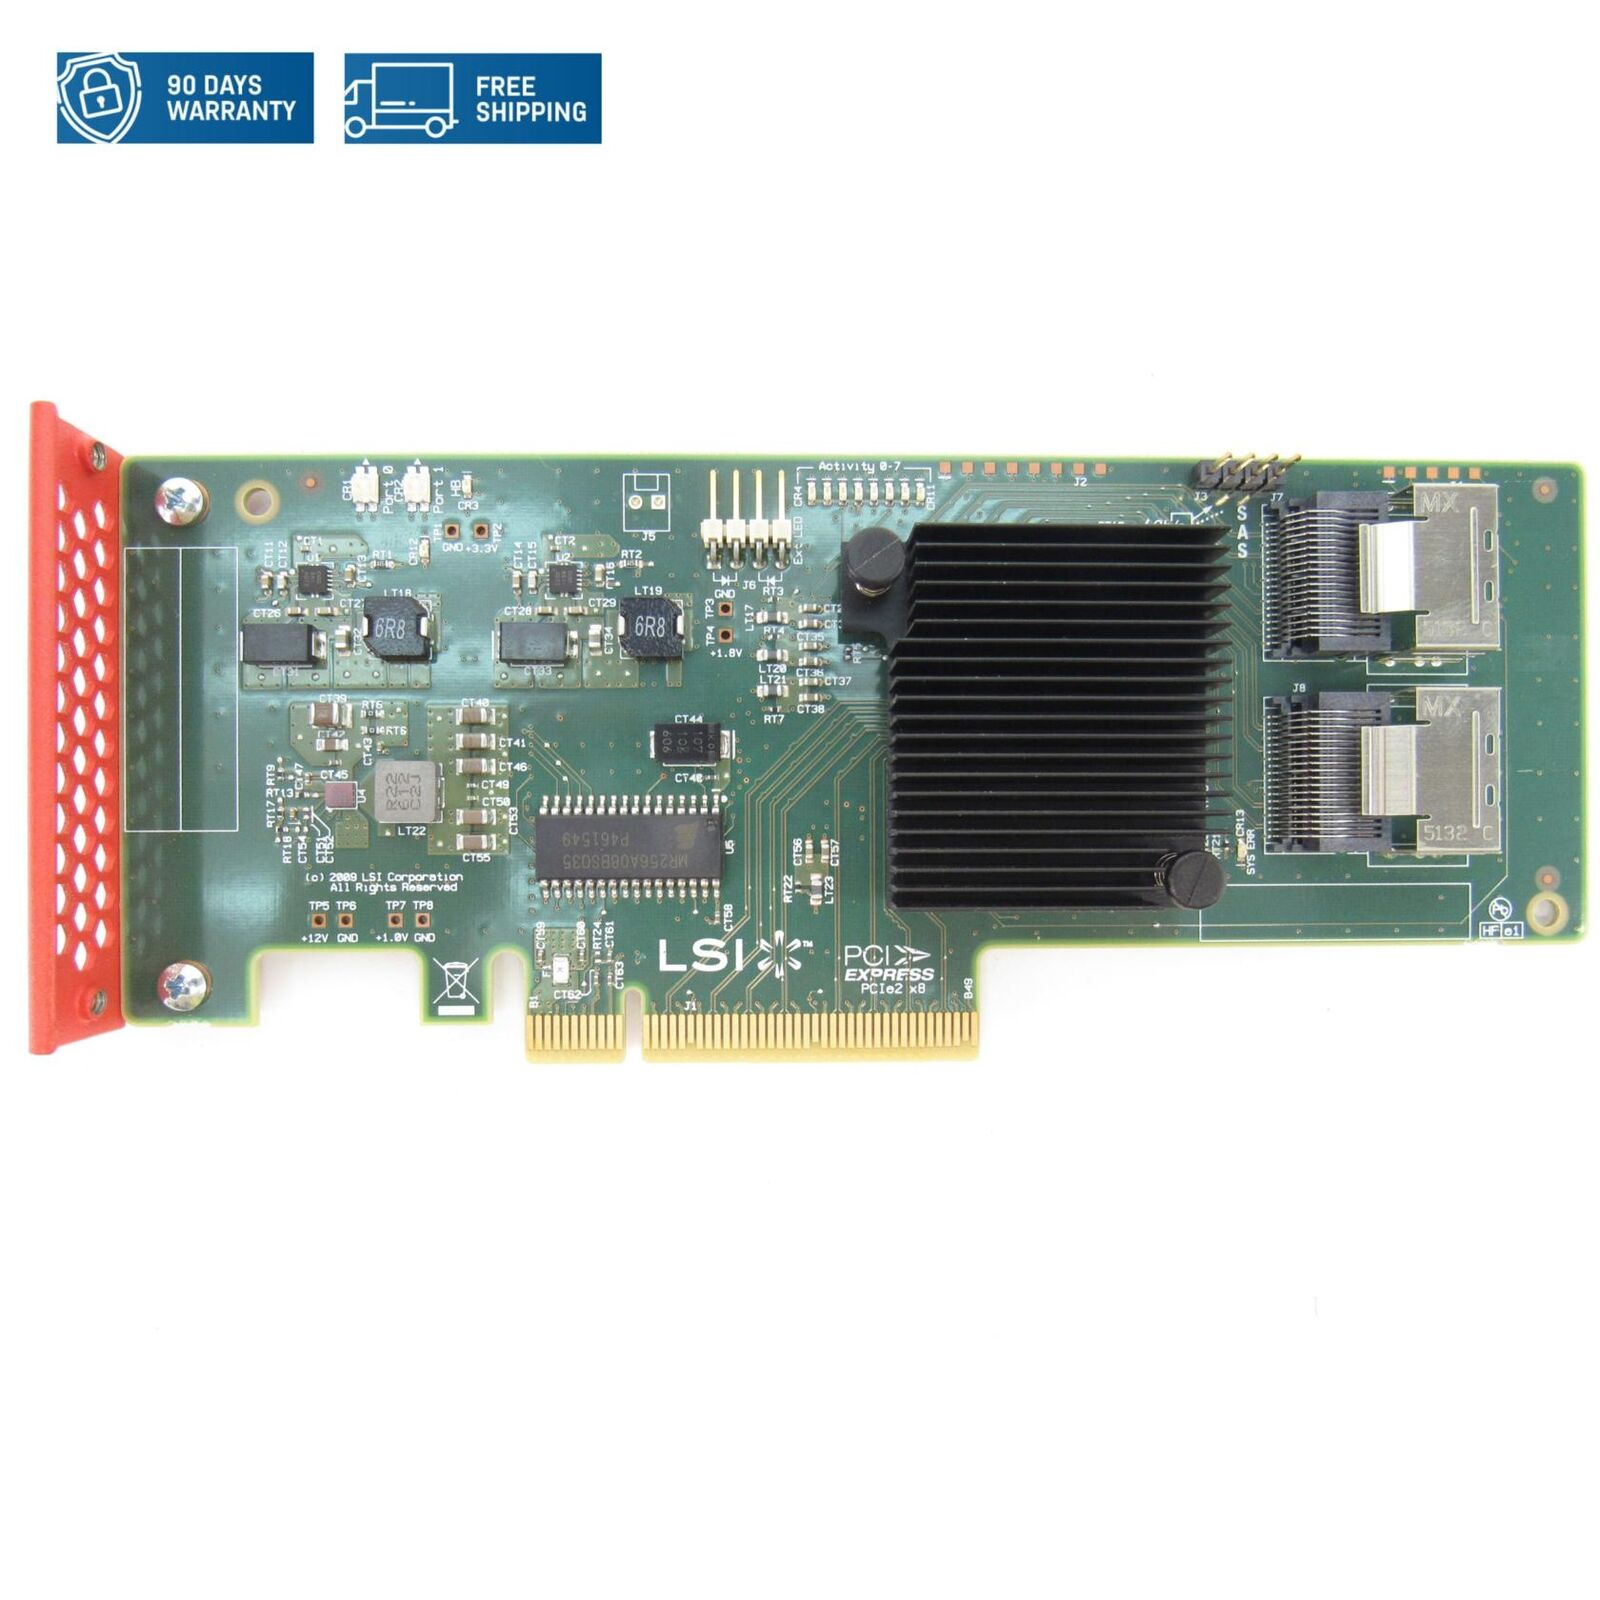 LSI 9211-8i 6gb/s SAS RAID Controller Card PCIe X8 H3-25250-02K SAS9211-8i